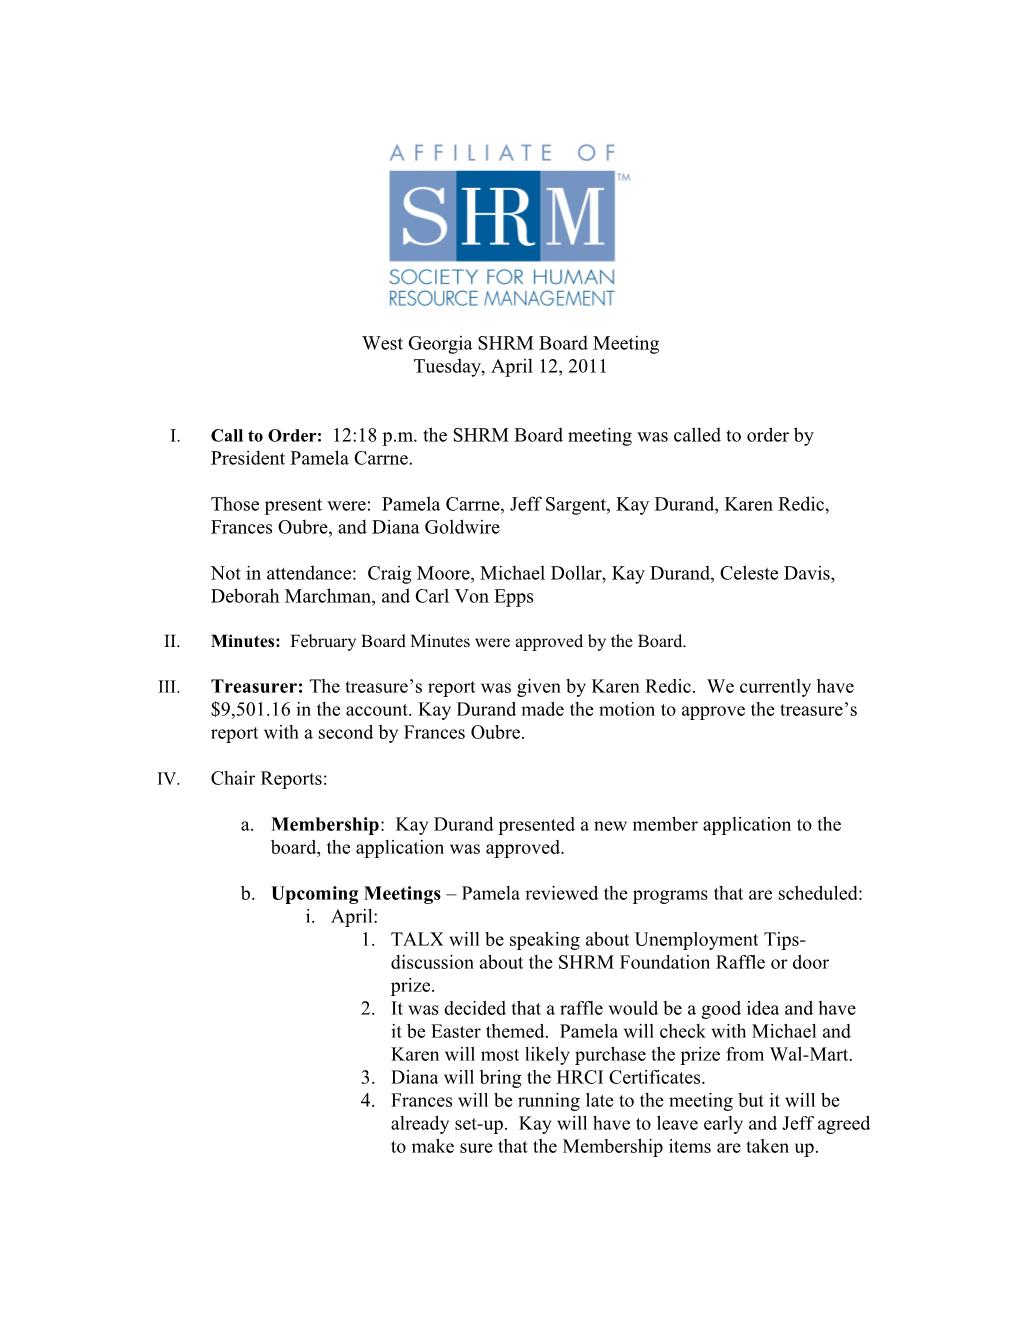 West Georgia SHRM Board of Directors Meeting